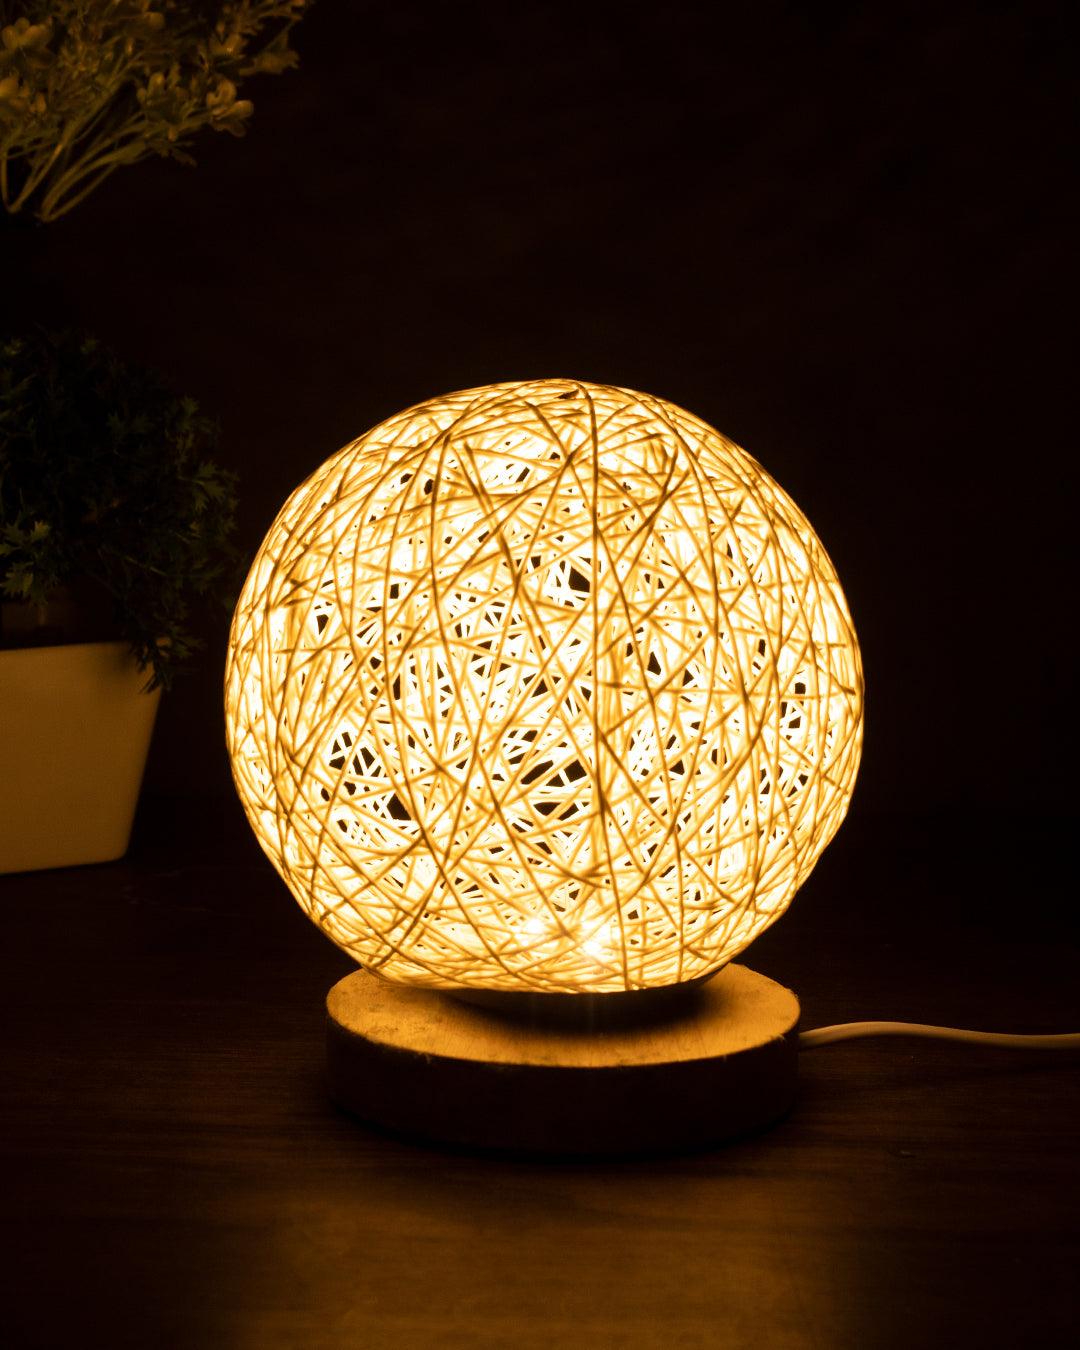 Decorative Globe Lamp, Mesh Design, White, Plastic & Cotton - MARKET 99